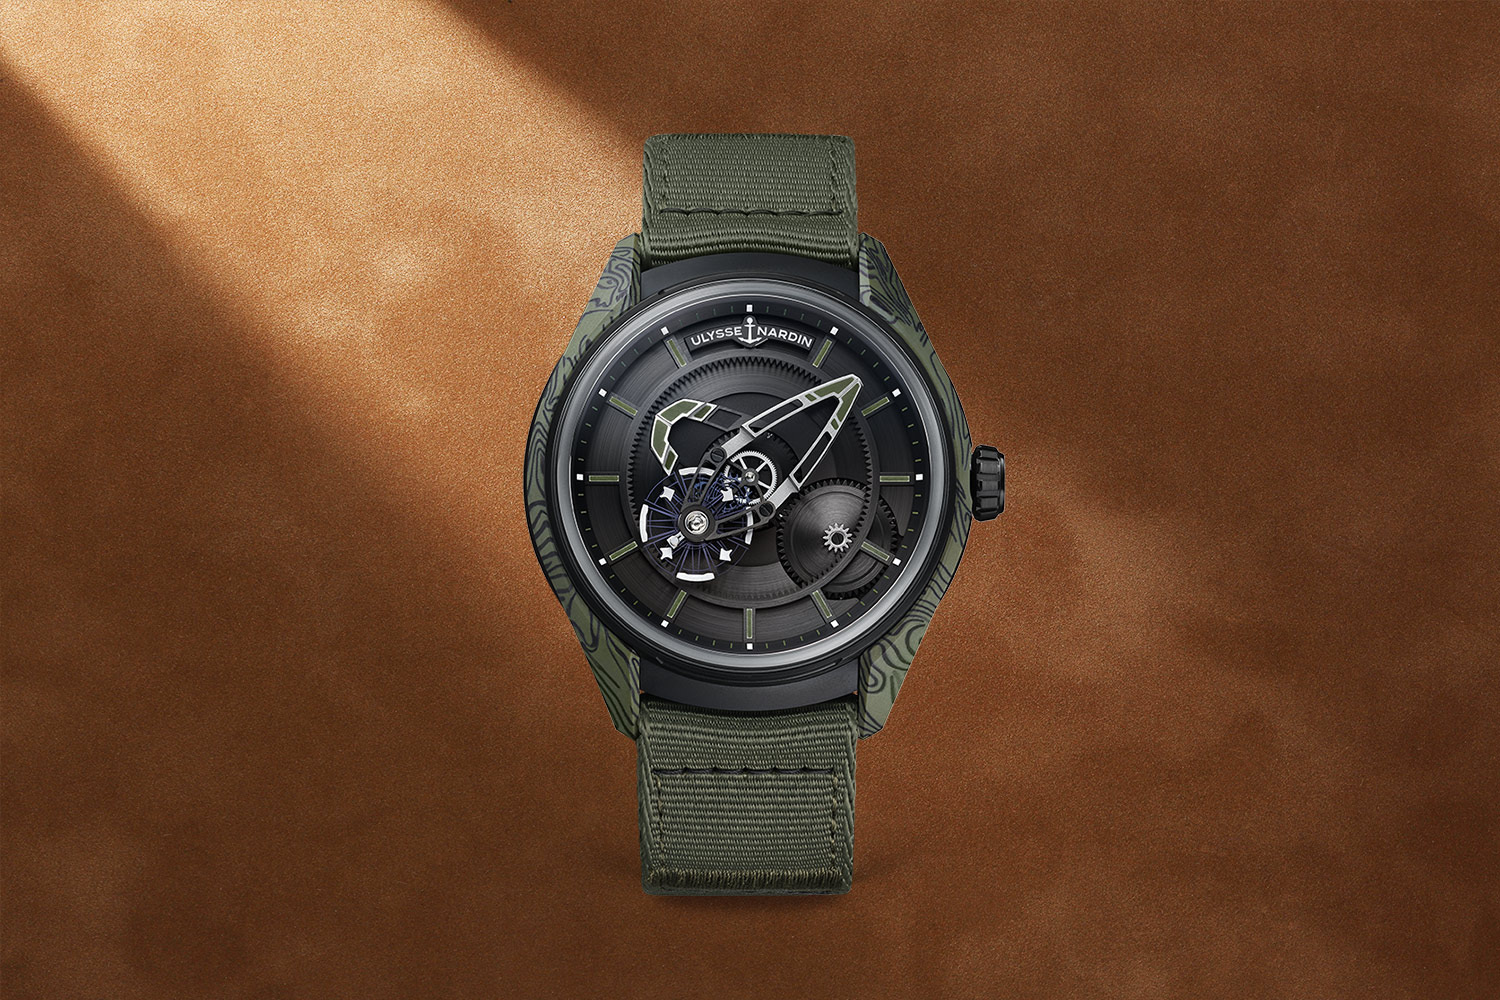 Dark green and black watch